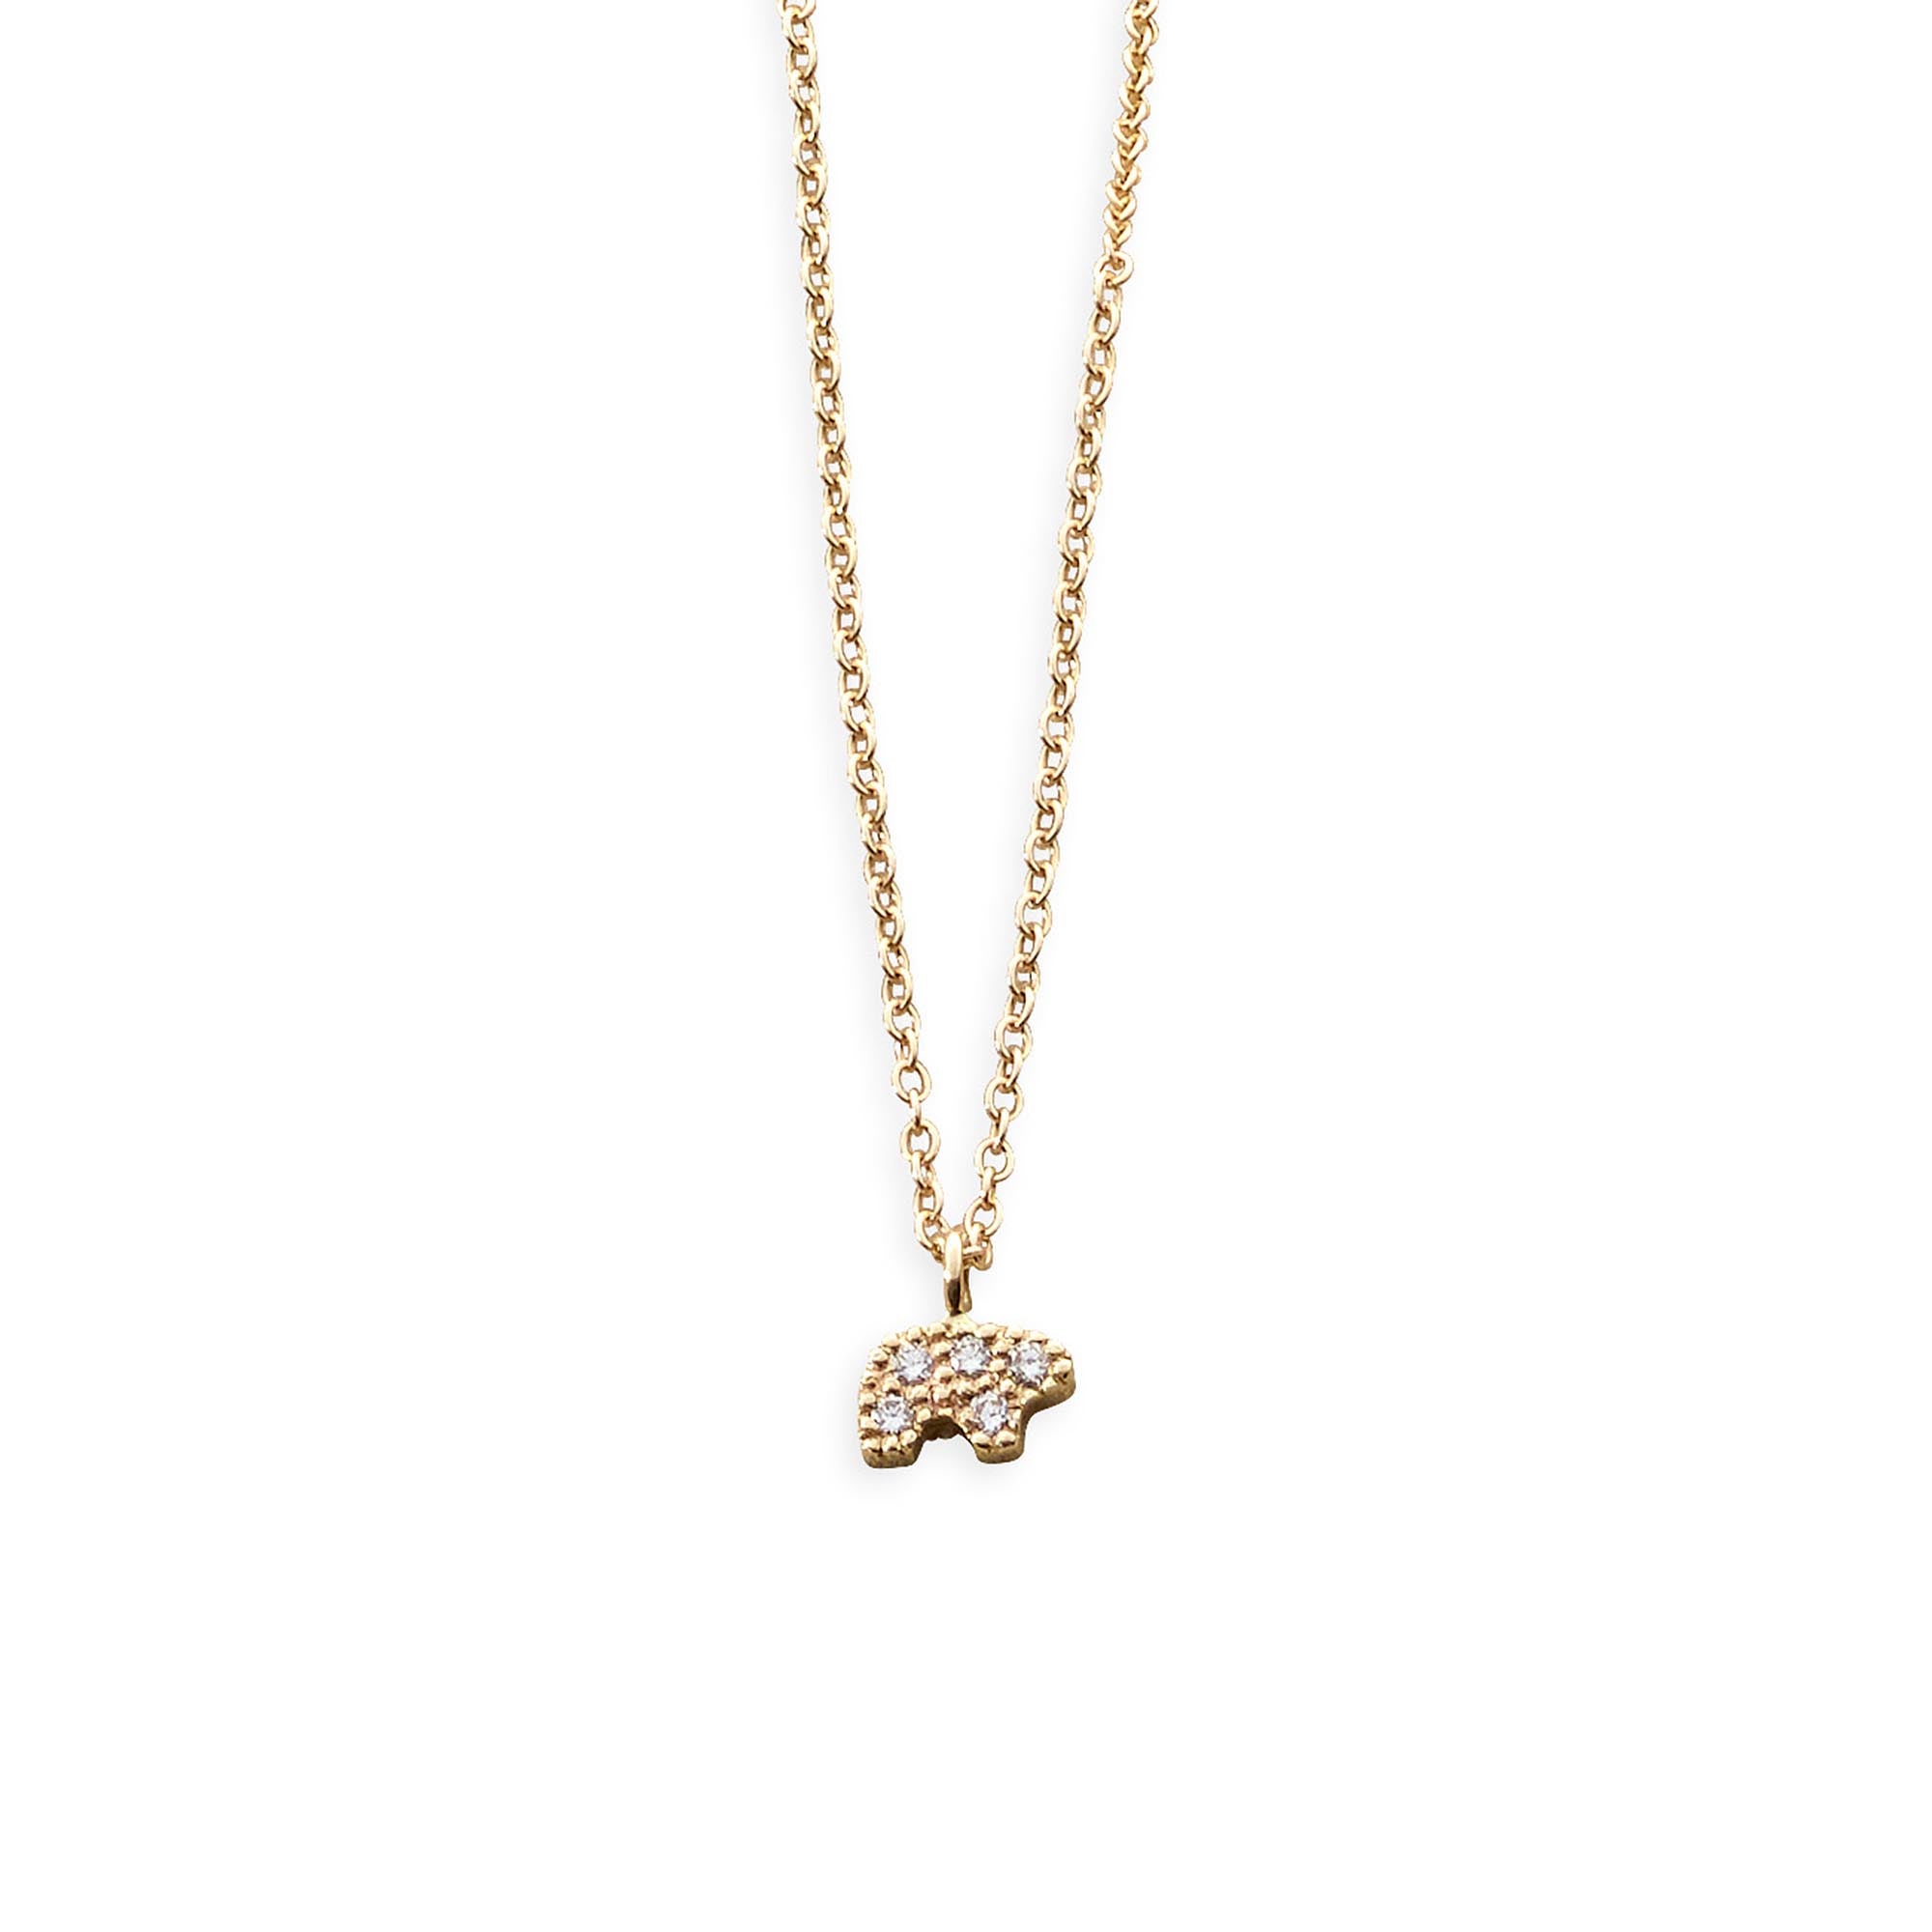 Teddy bear necklace | Bear necklace, Fancy jewelry, Bff necklaces